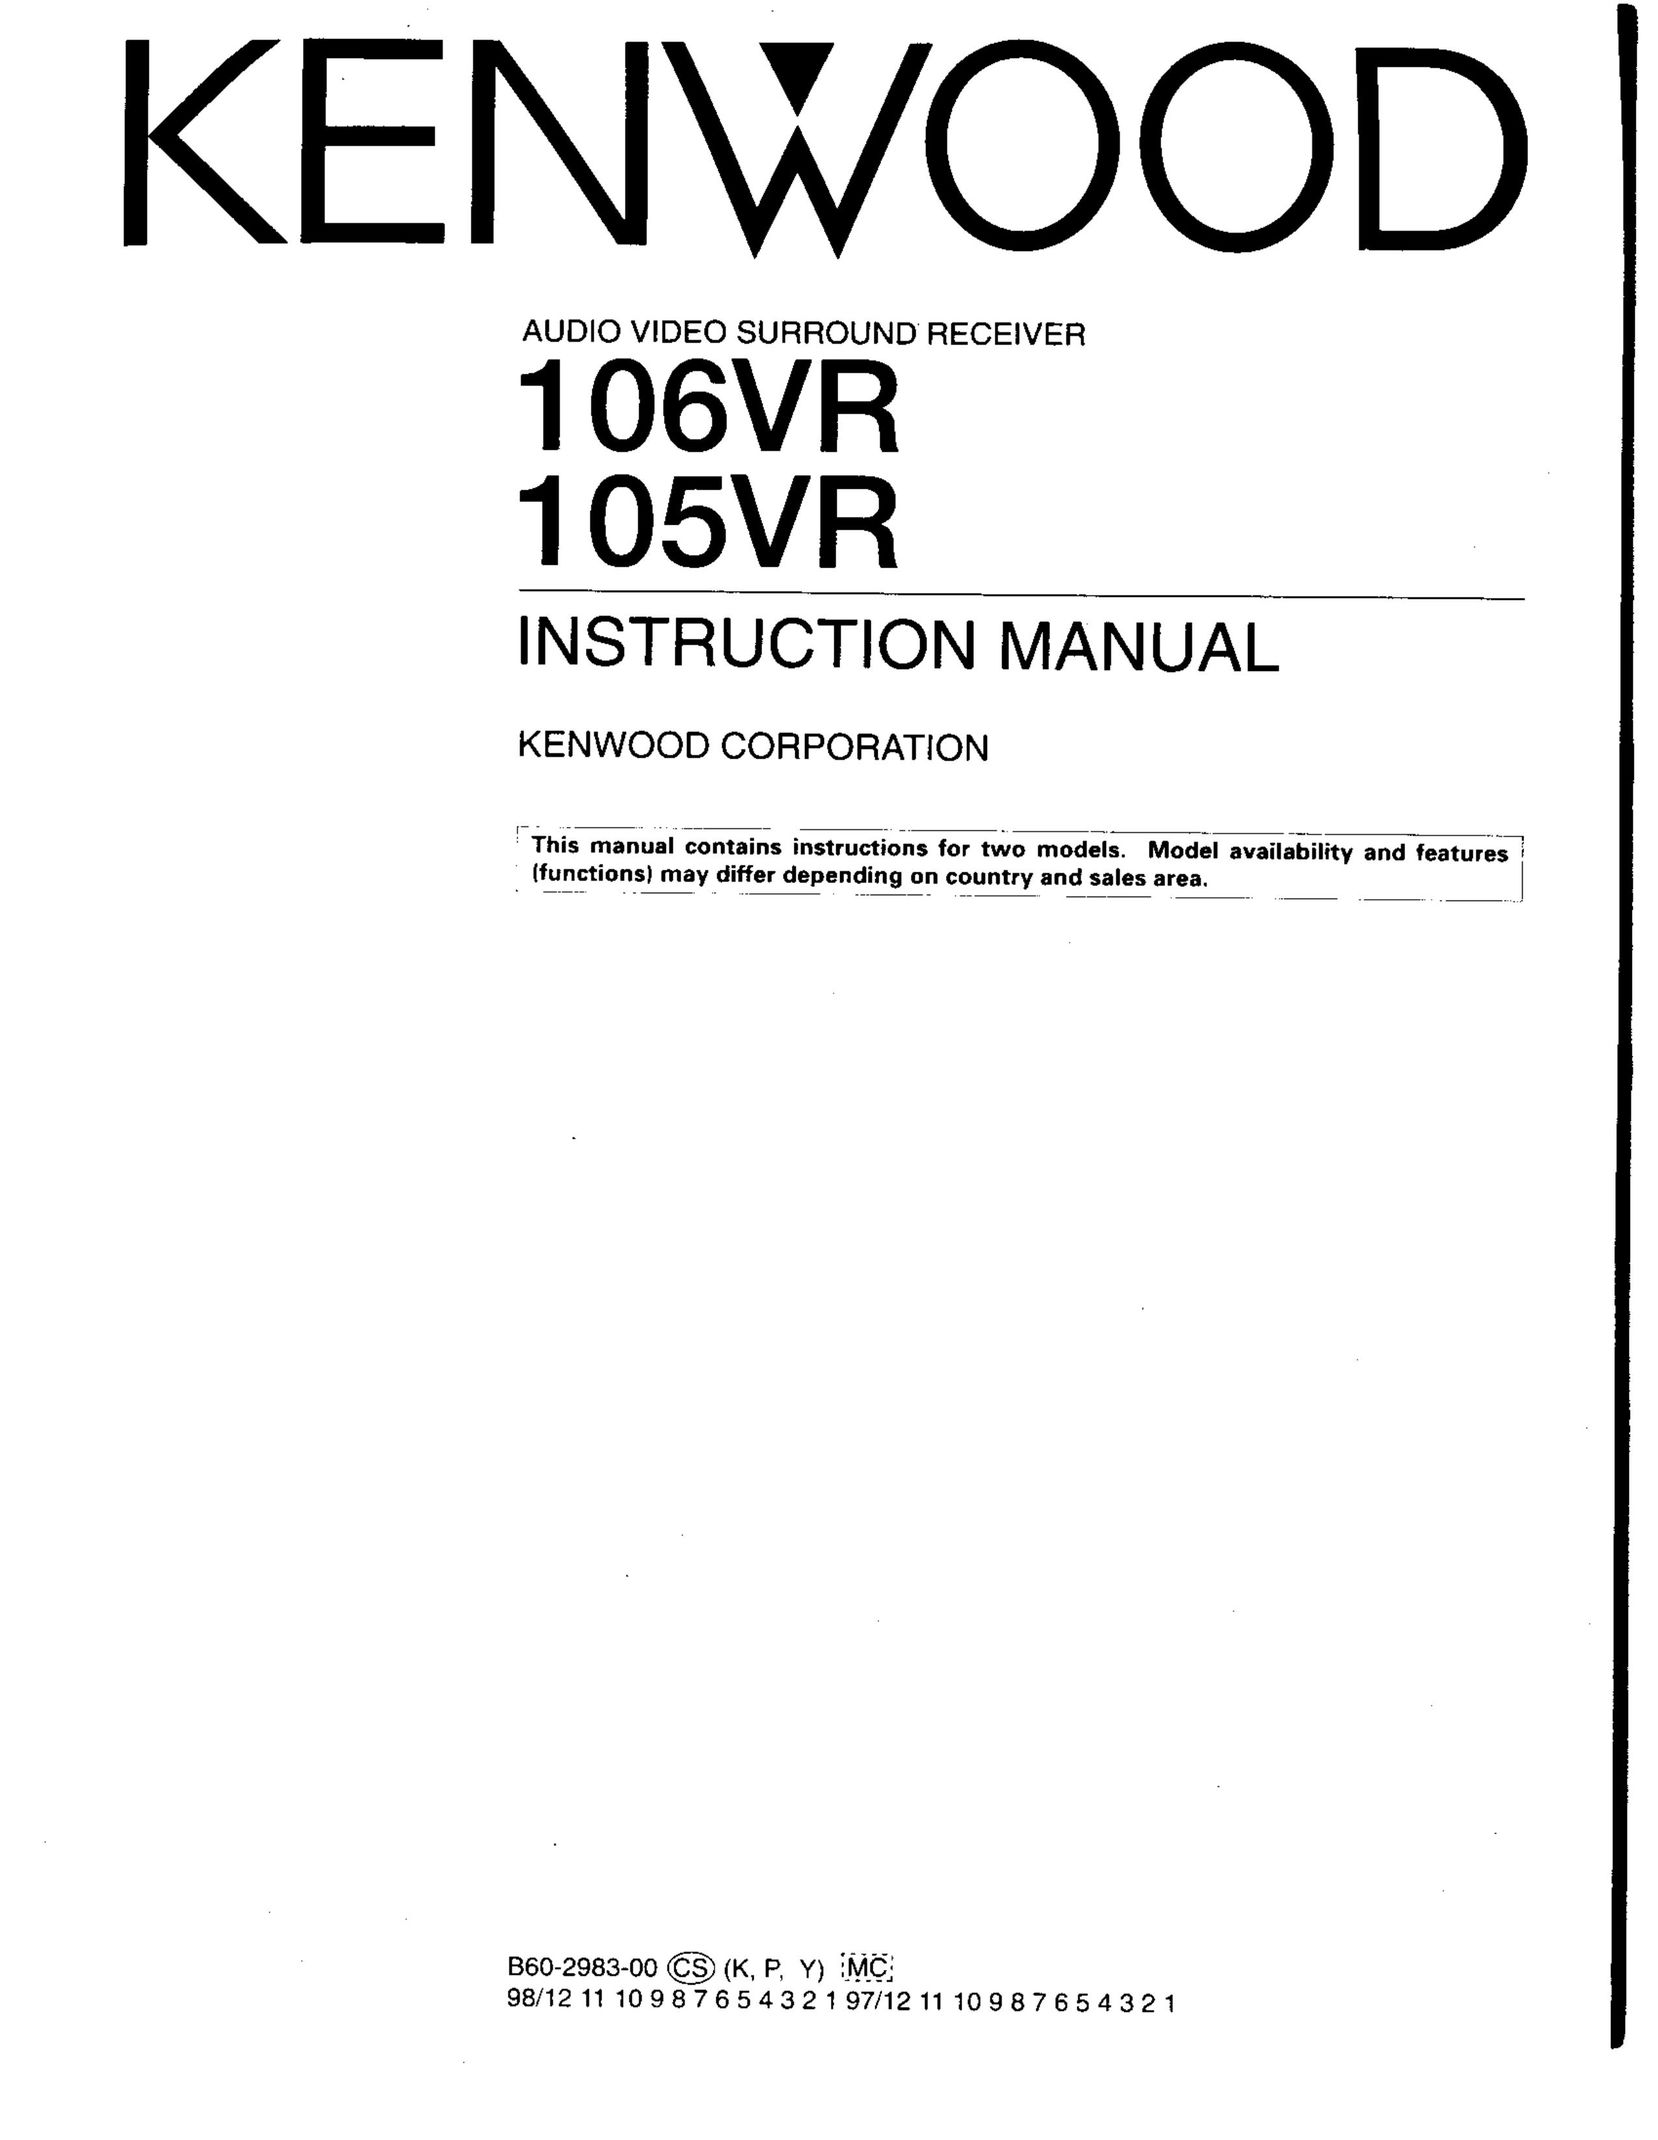 Kenwood 106VR Stereo Receiver User Manual